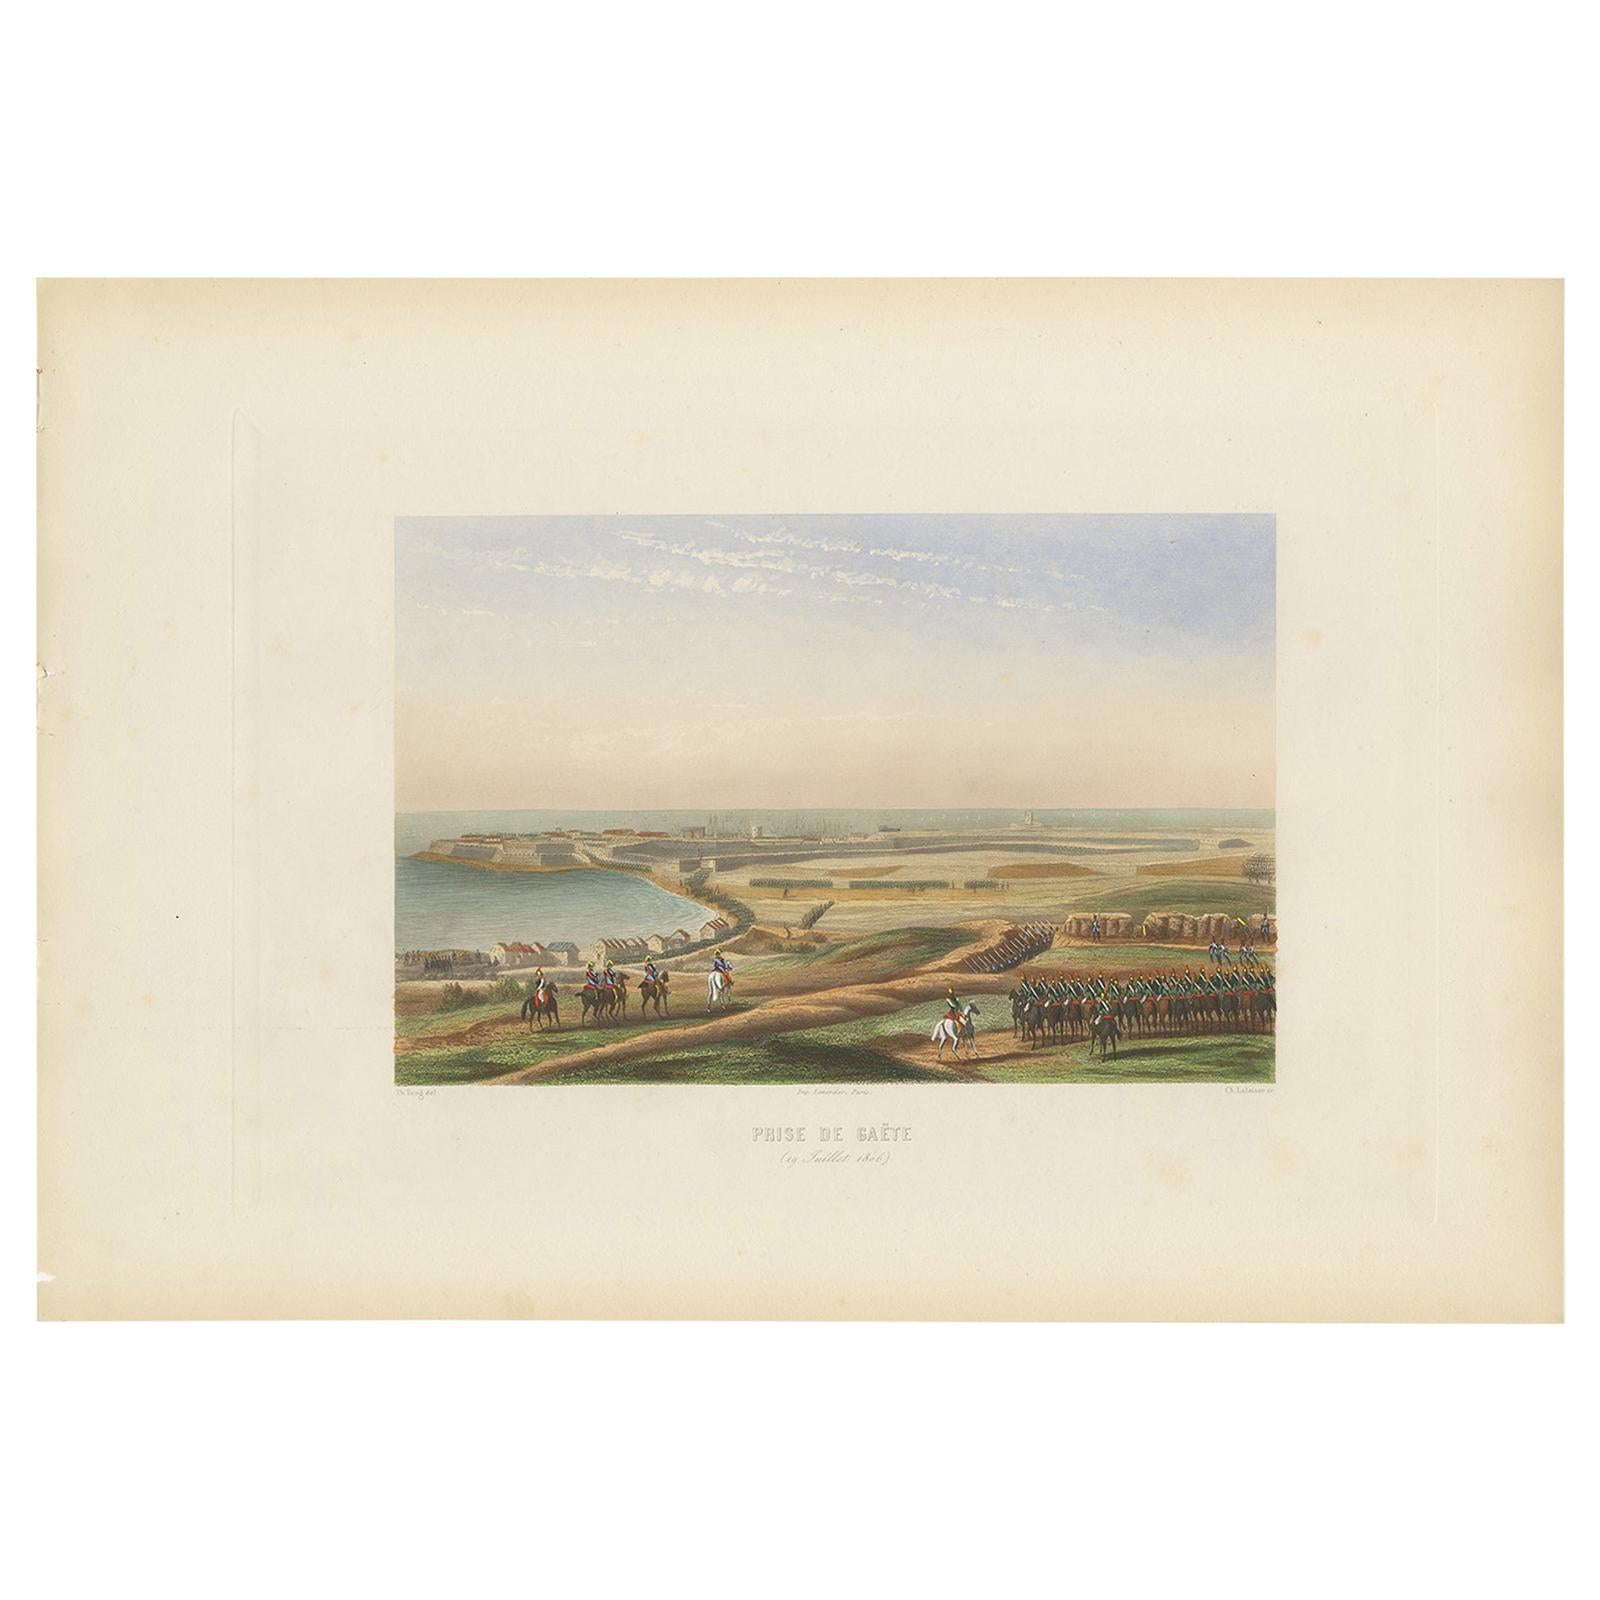 Impression ancienne de la Siege de Gaeta (vers 1860)